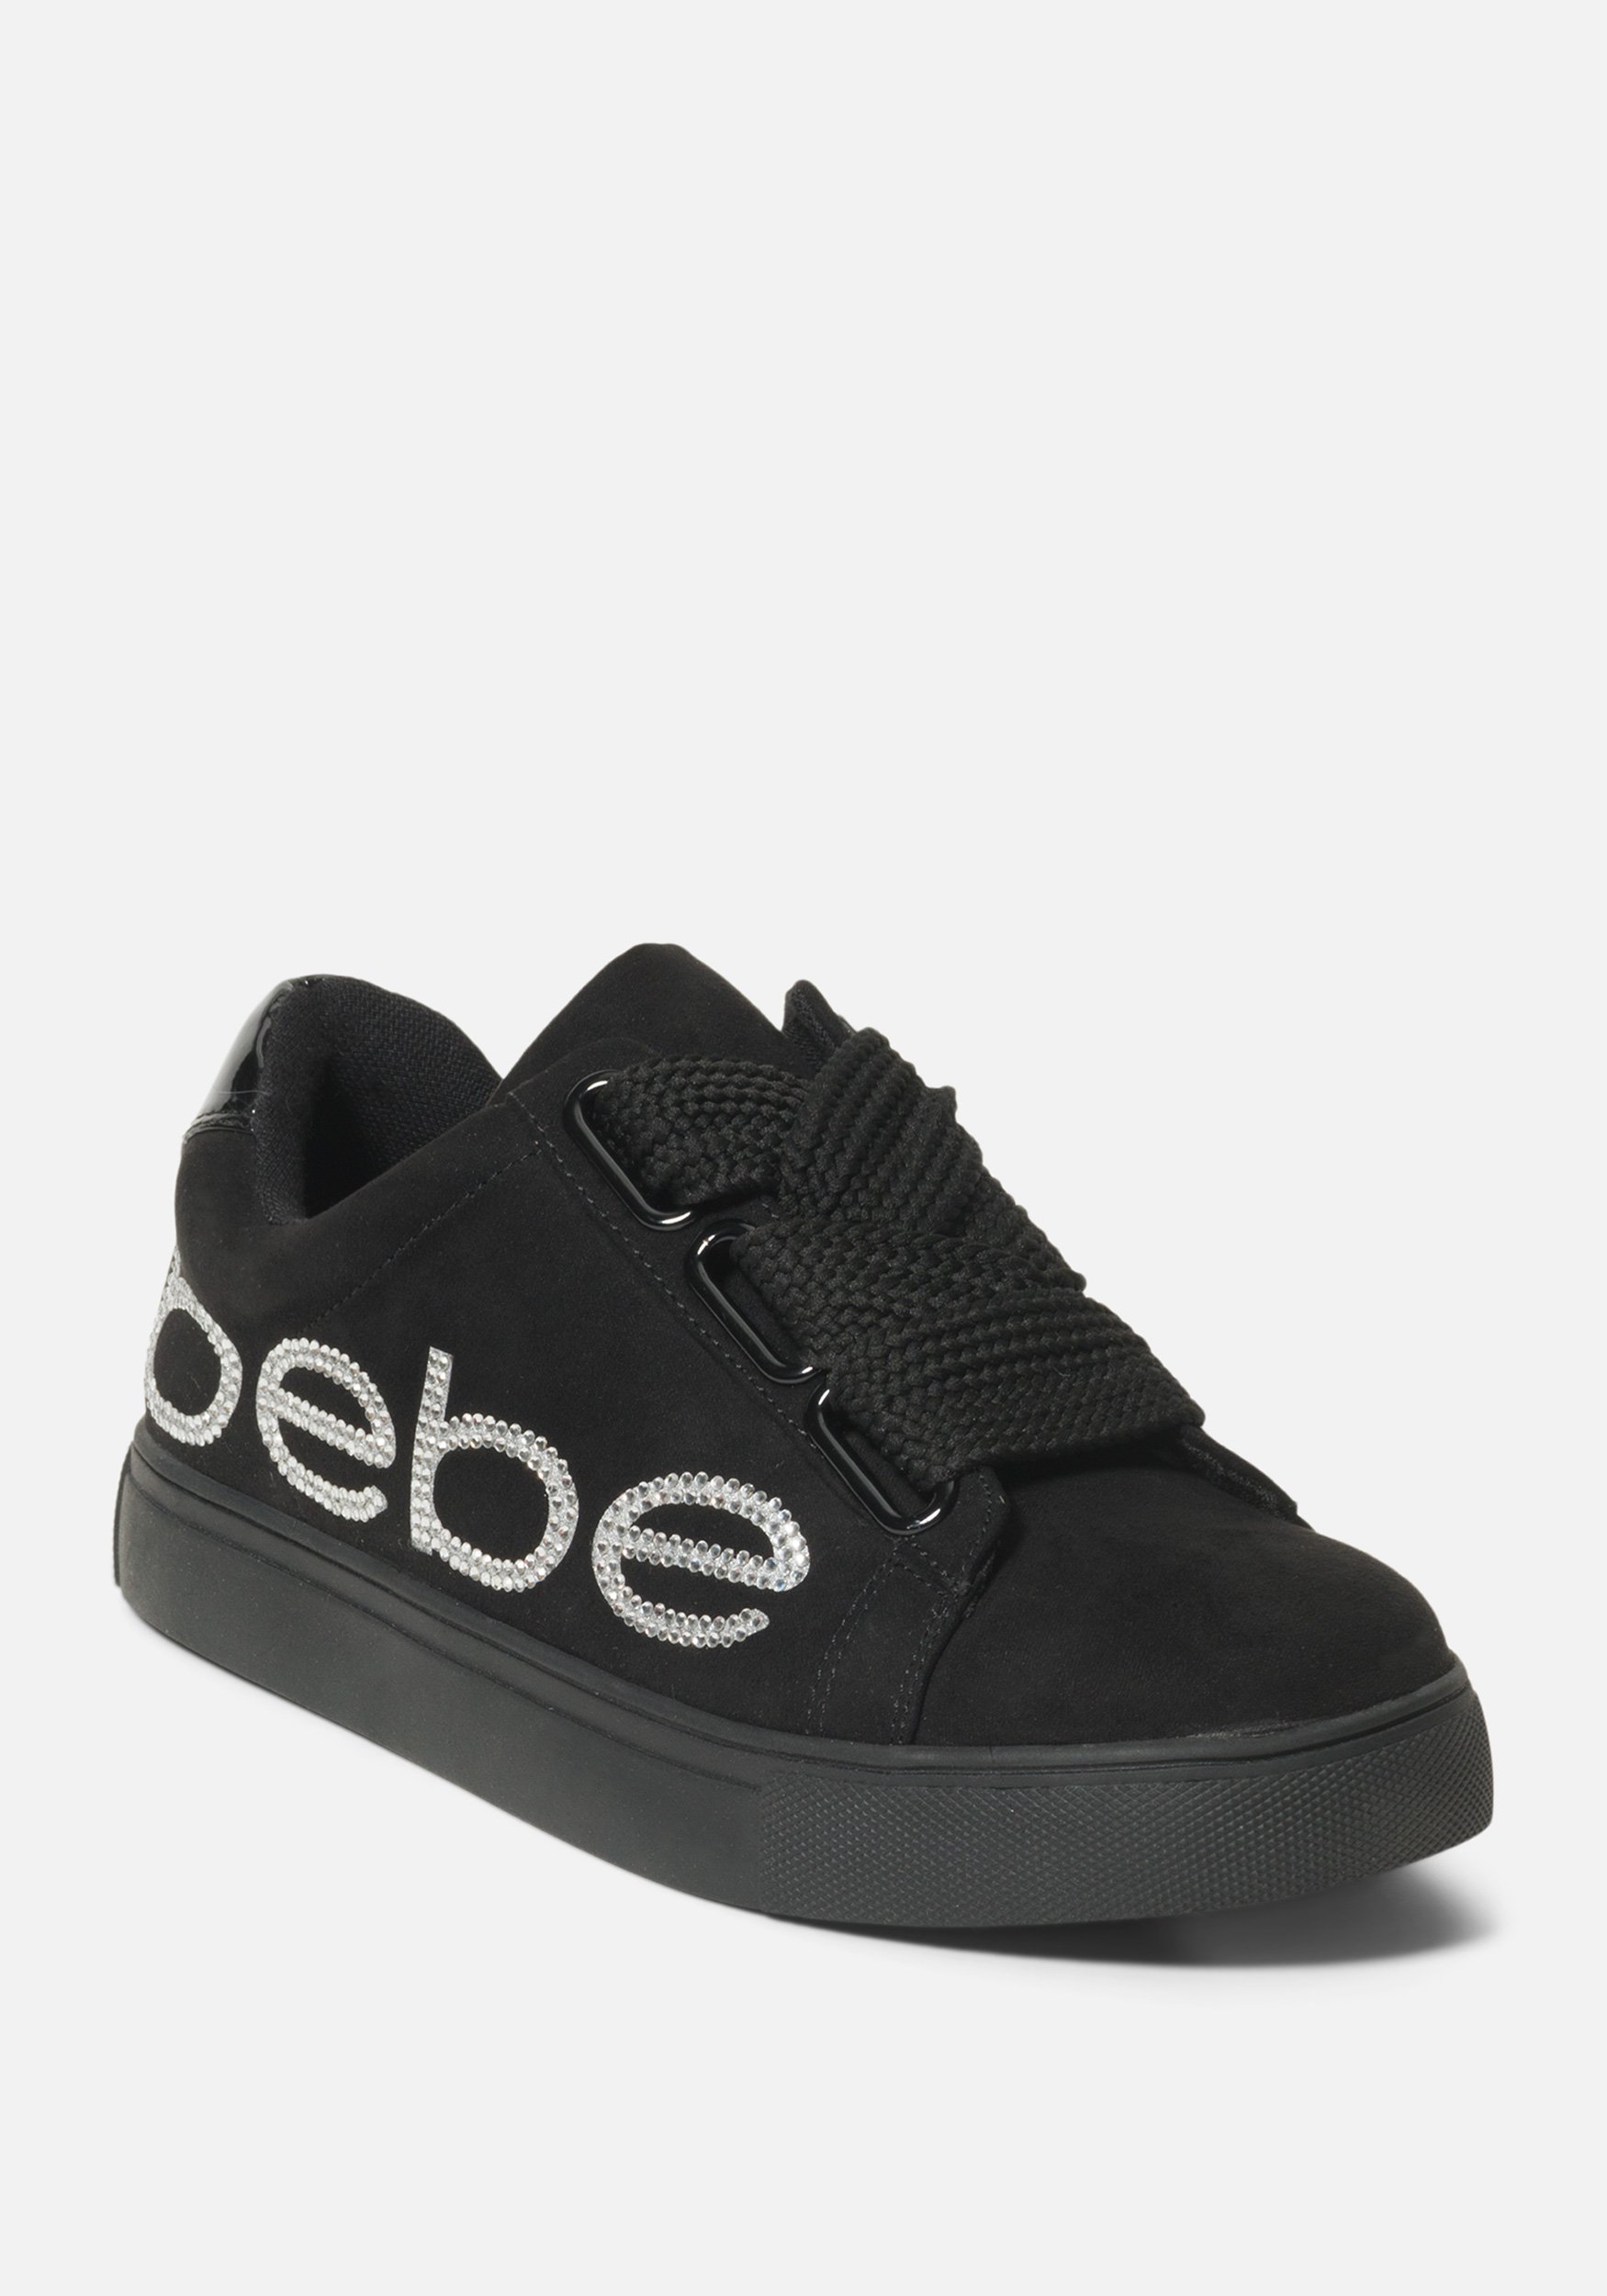 Women's Cabree Bebe Logo Sneakers, Size 10 in Black Synthetic